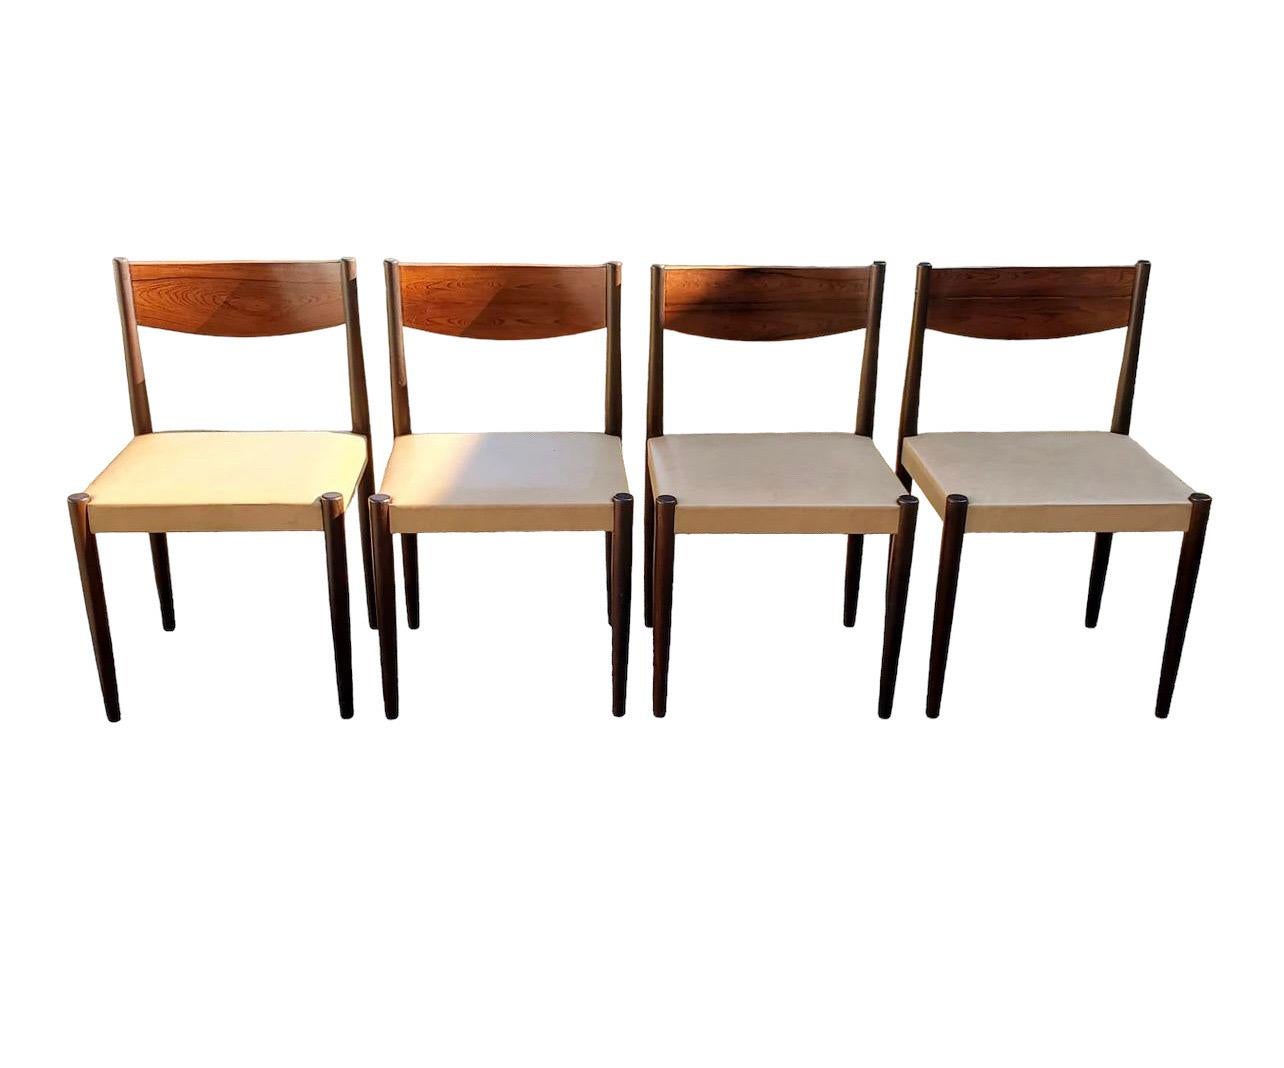 Vintage Danish Mid Century Modern Rosewood Dining Chair Set by Frem Rojle

Dimensions. 18 W ; 18 D ; 31 H